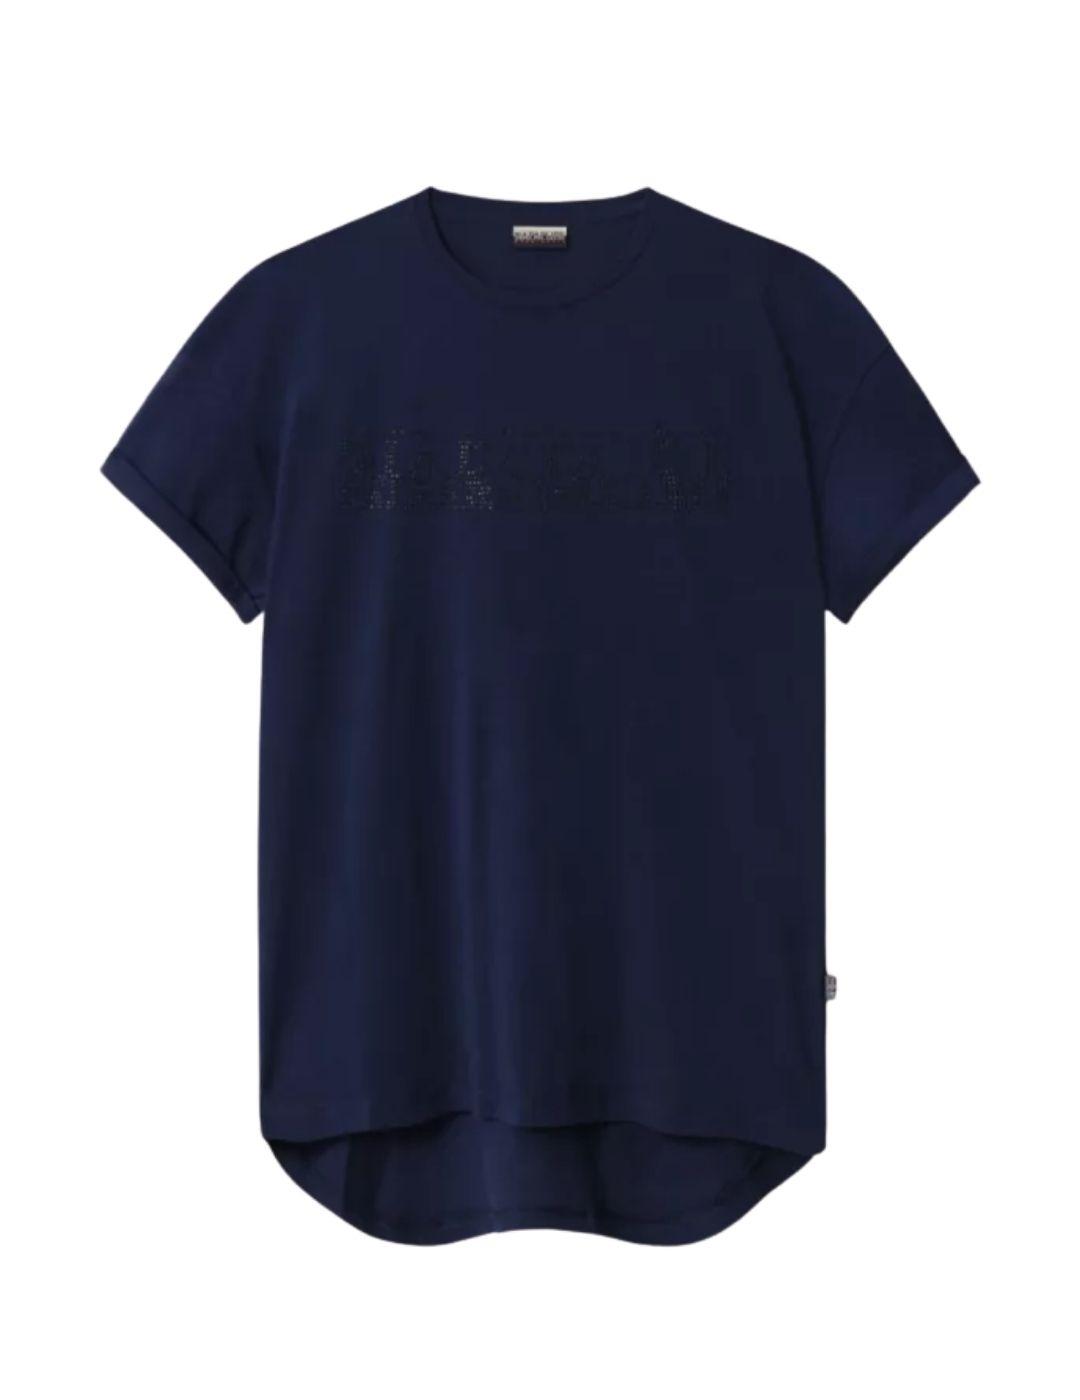 Camiseta Napapijri Siccari azul marino para mujer manga cort